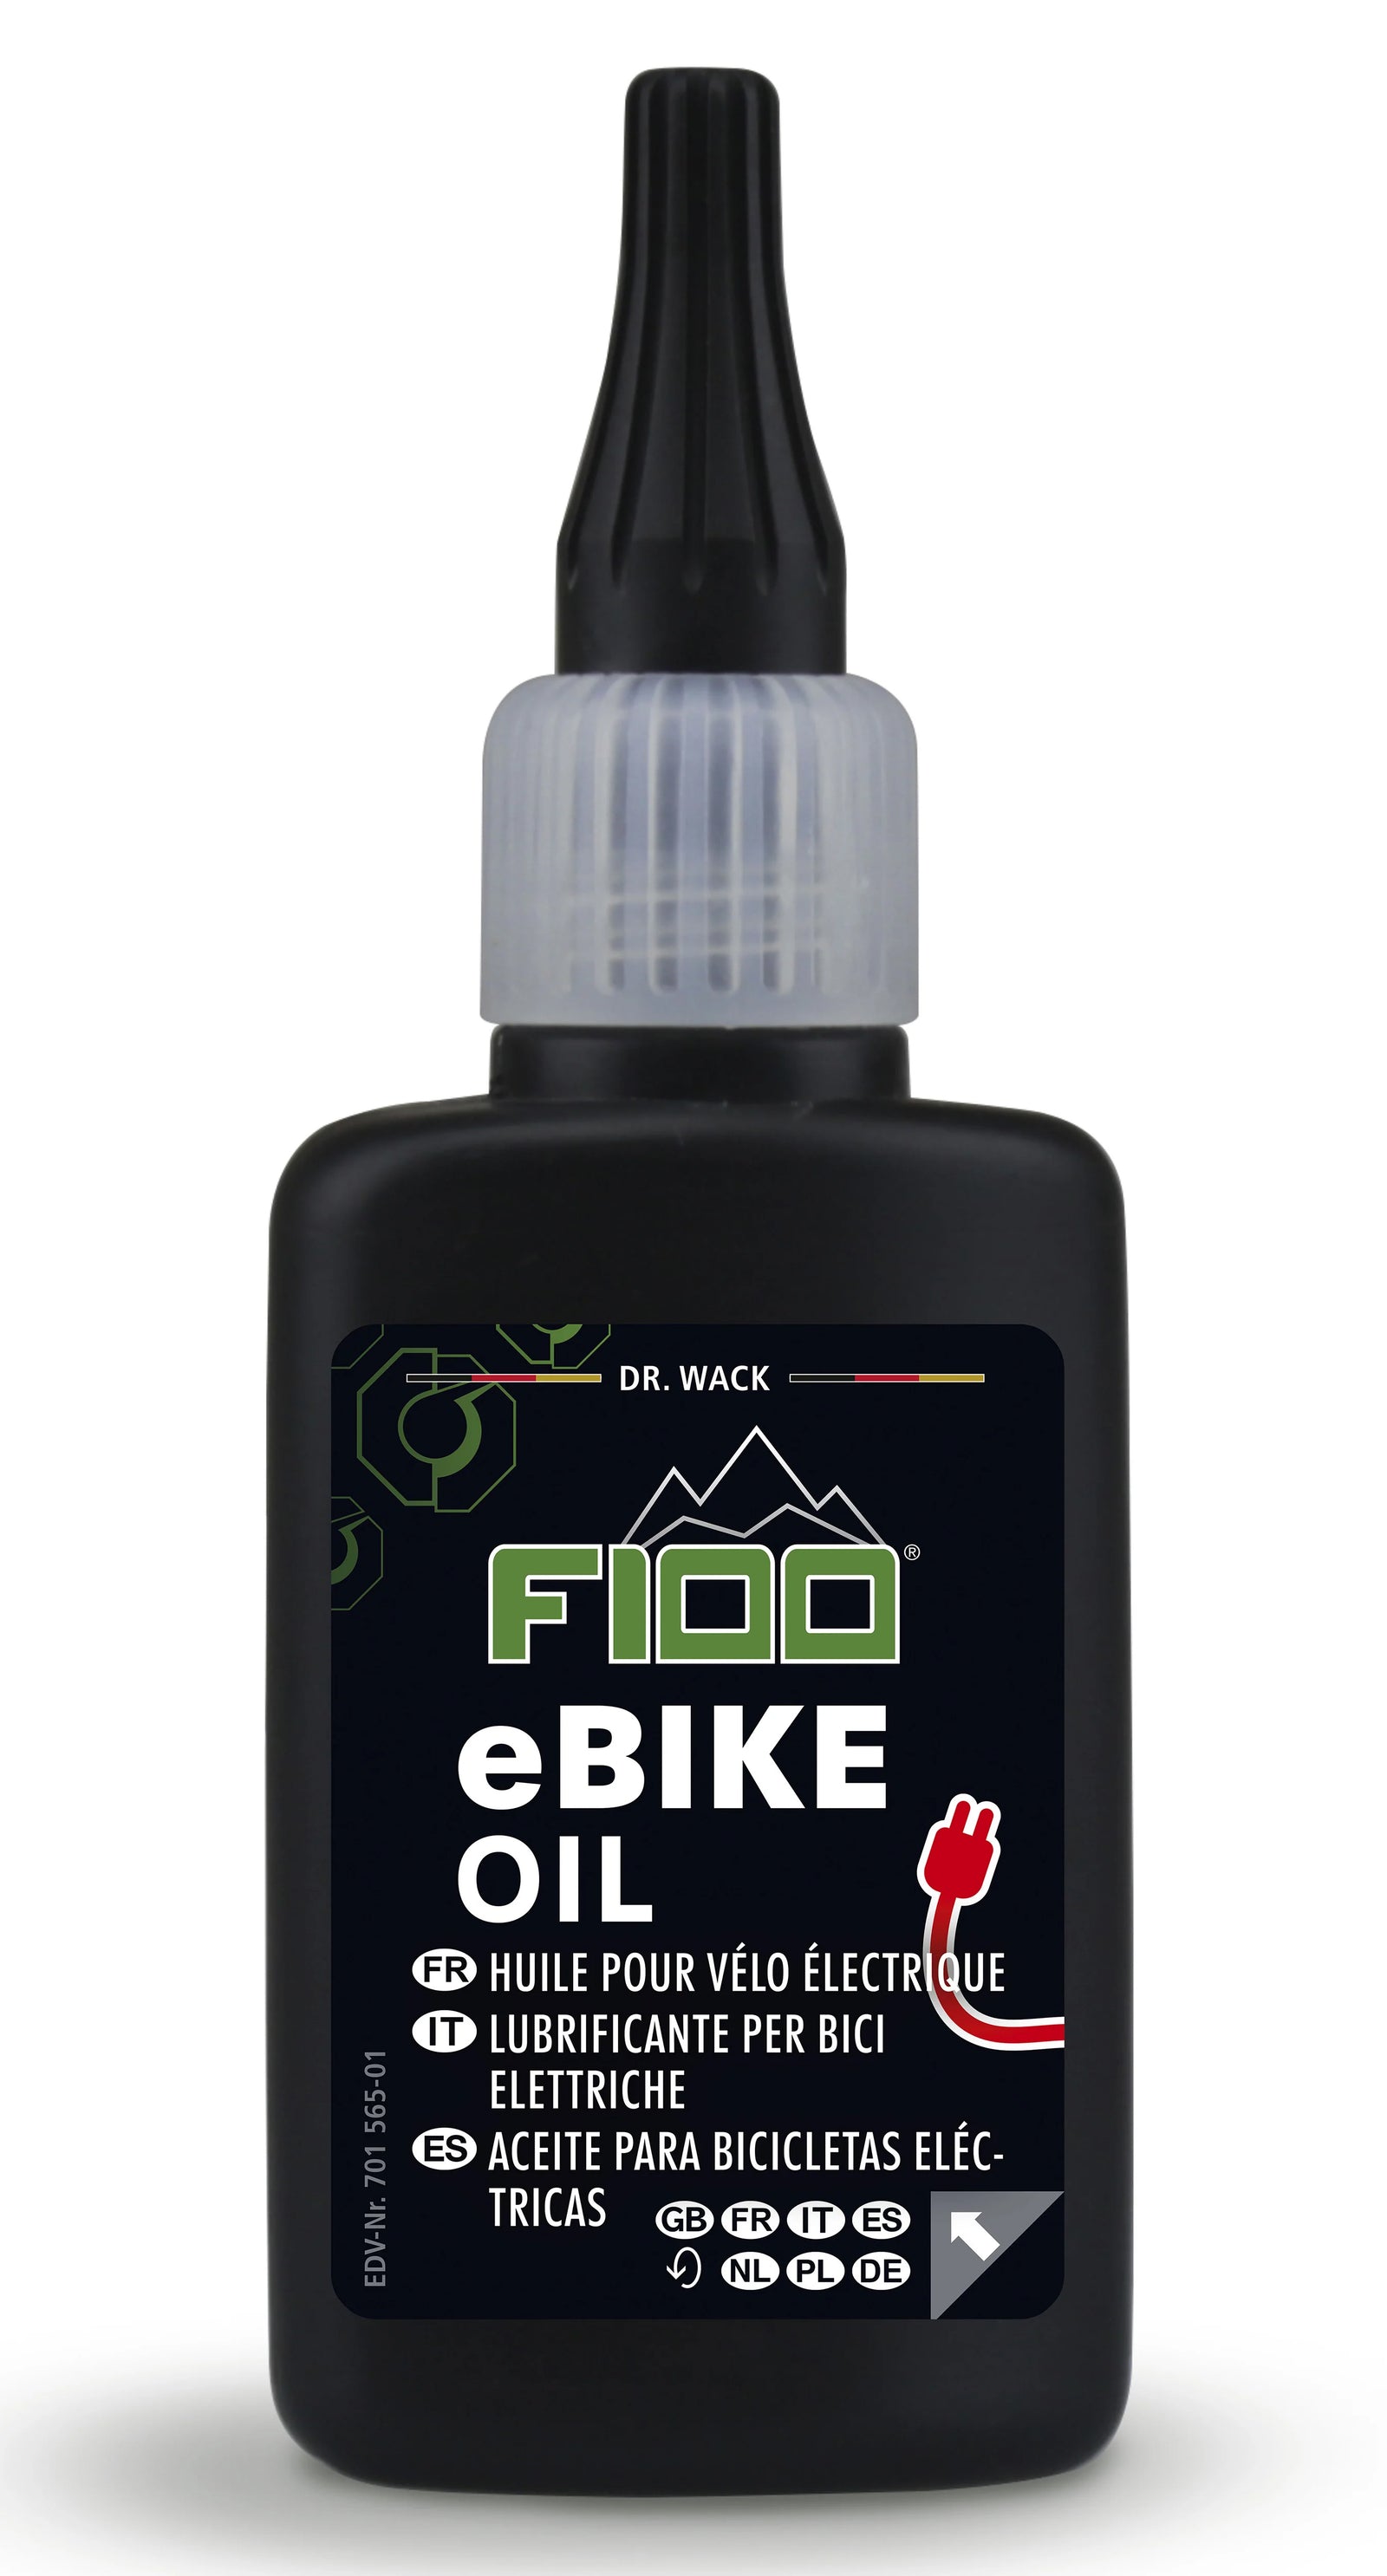 E-bike oil DR.WACK F100 e-bike lube - dropper bottle à 50ml